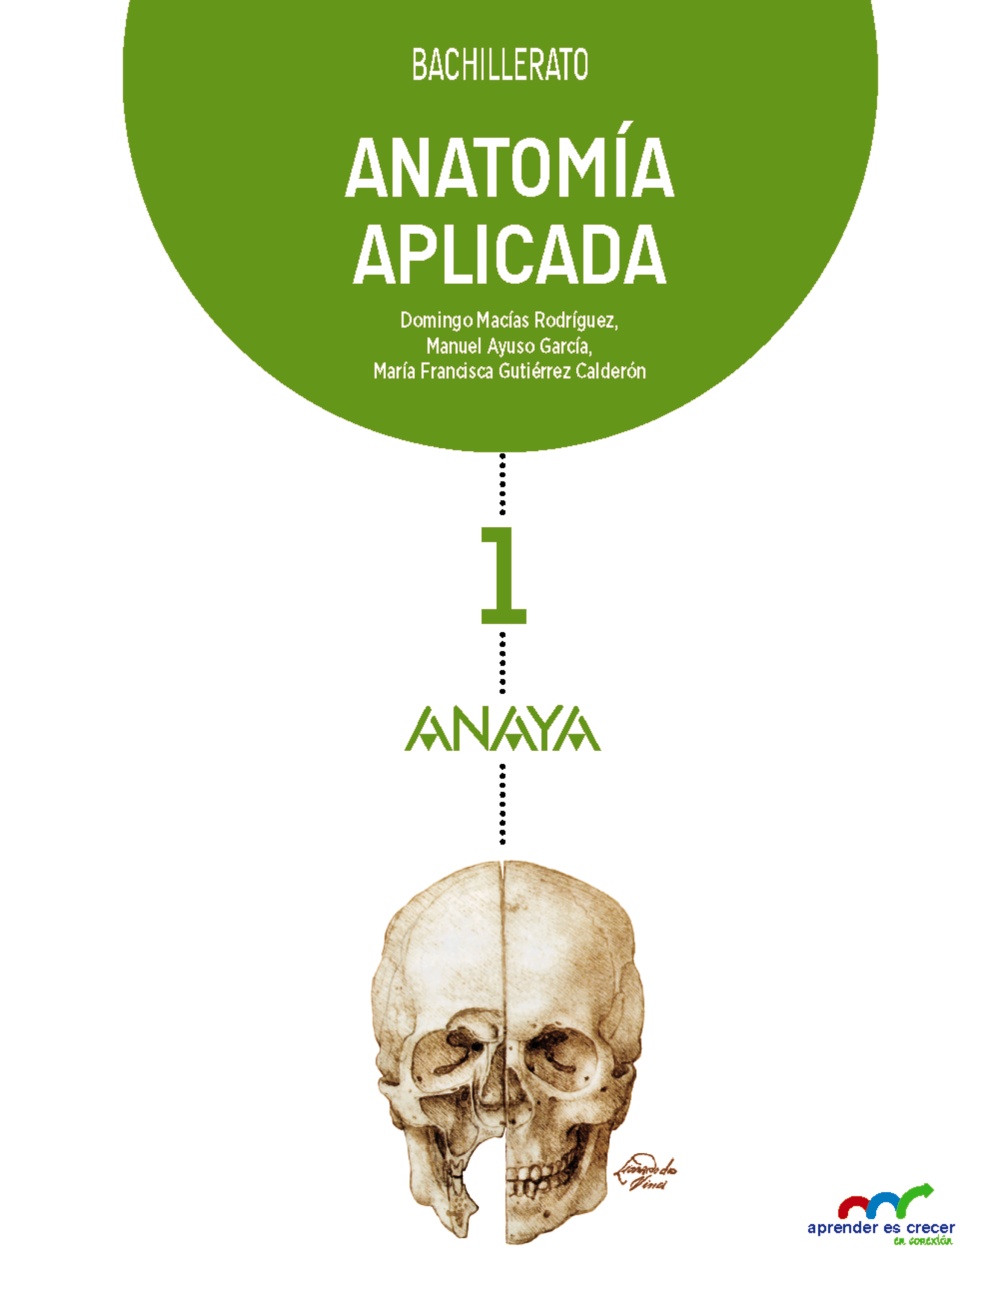 Solucionario Anatomia Aplicada 1 Bachillerato Anaya Aprender es Crecer-pdf